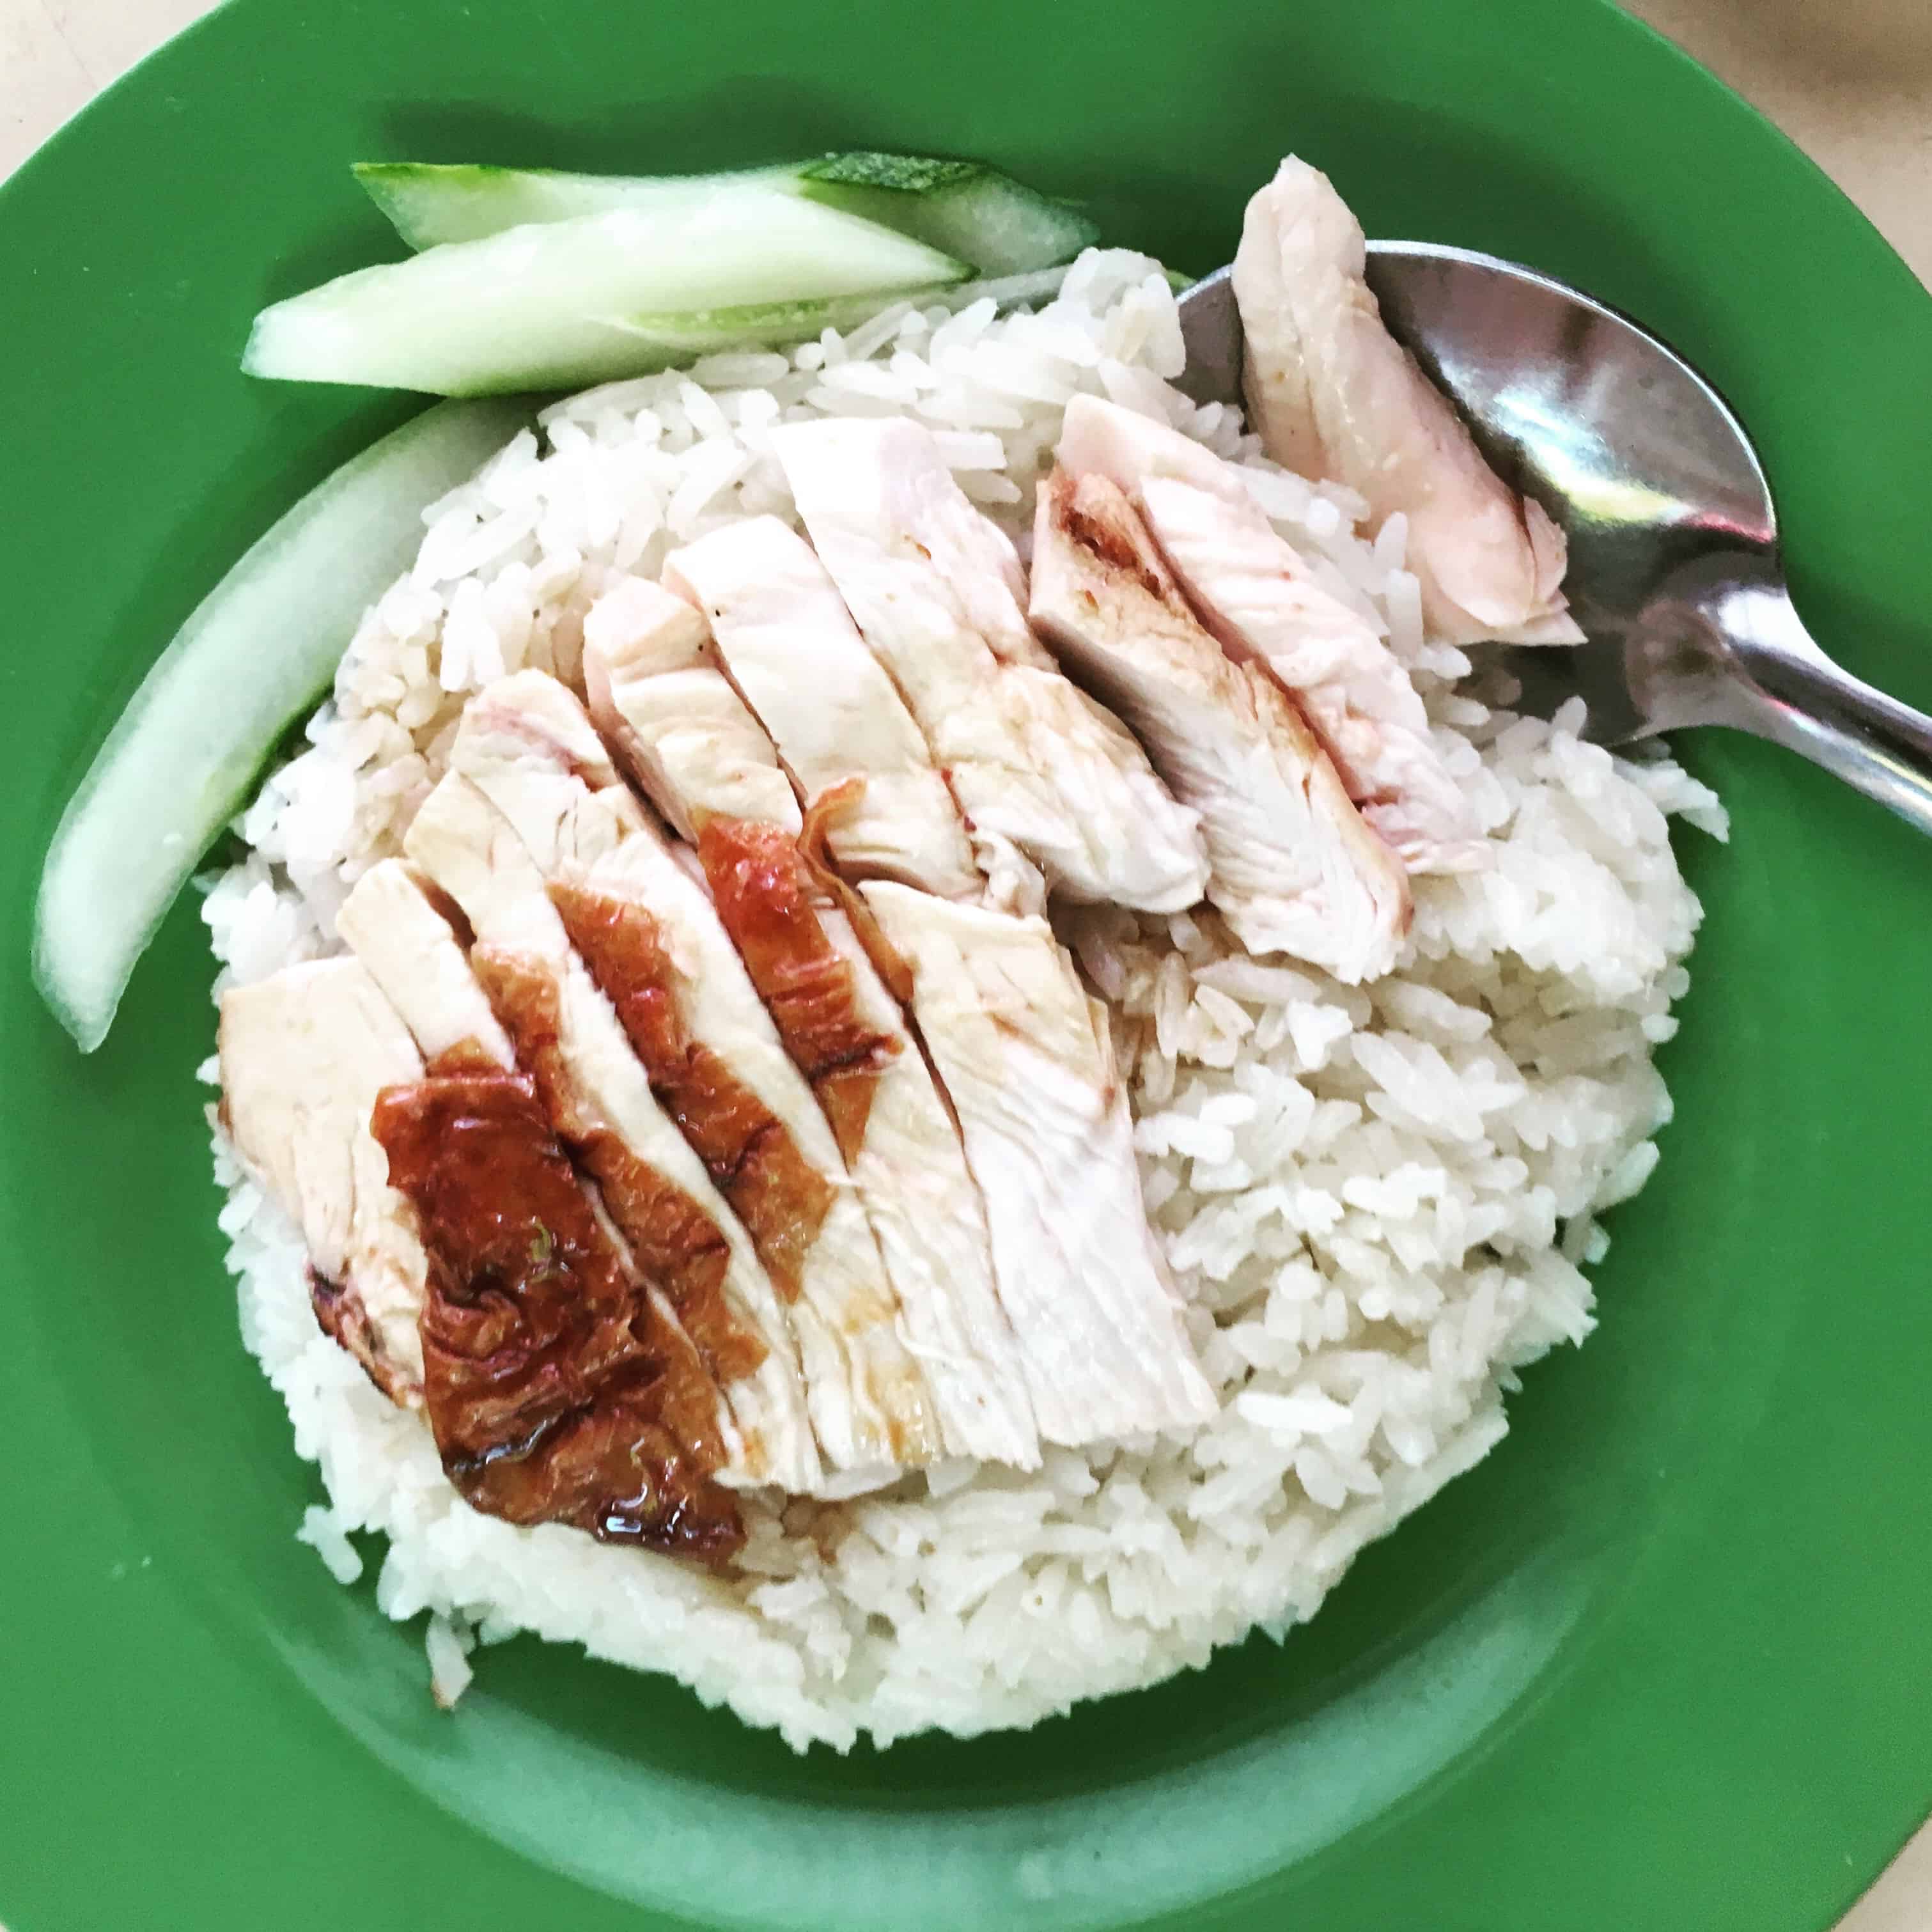 Singapore's National Dish: Chicken Rice